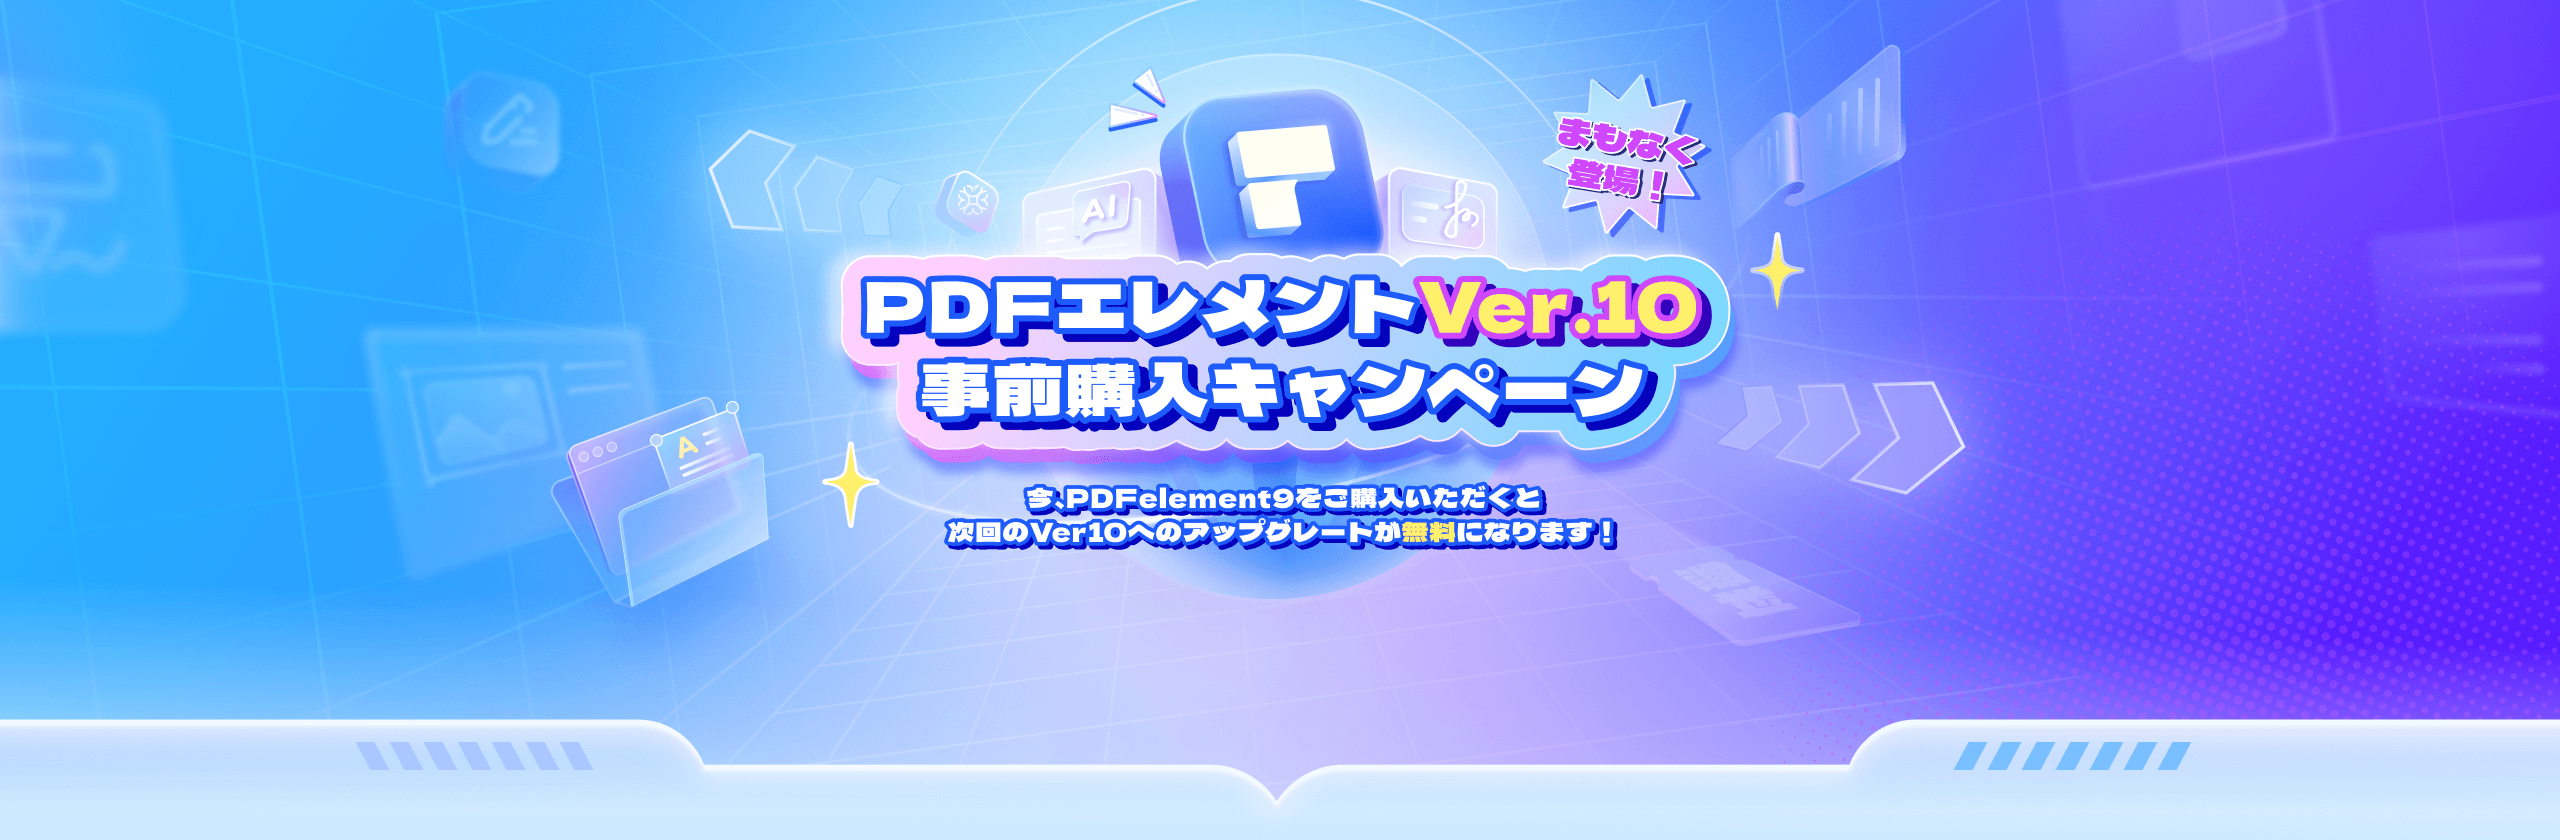 PDFエレメント Ver.10 事前購入キャンペーン